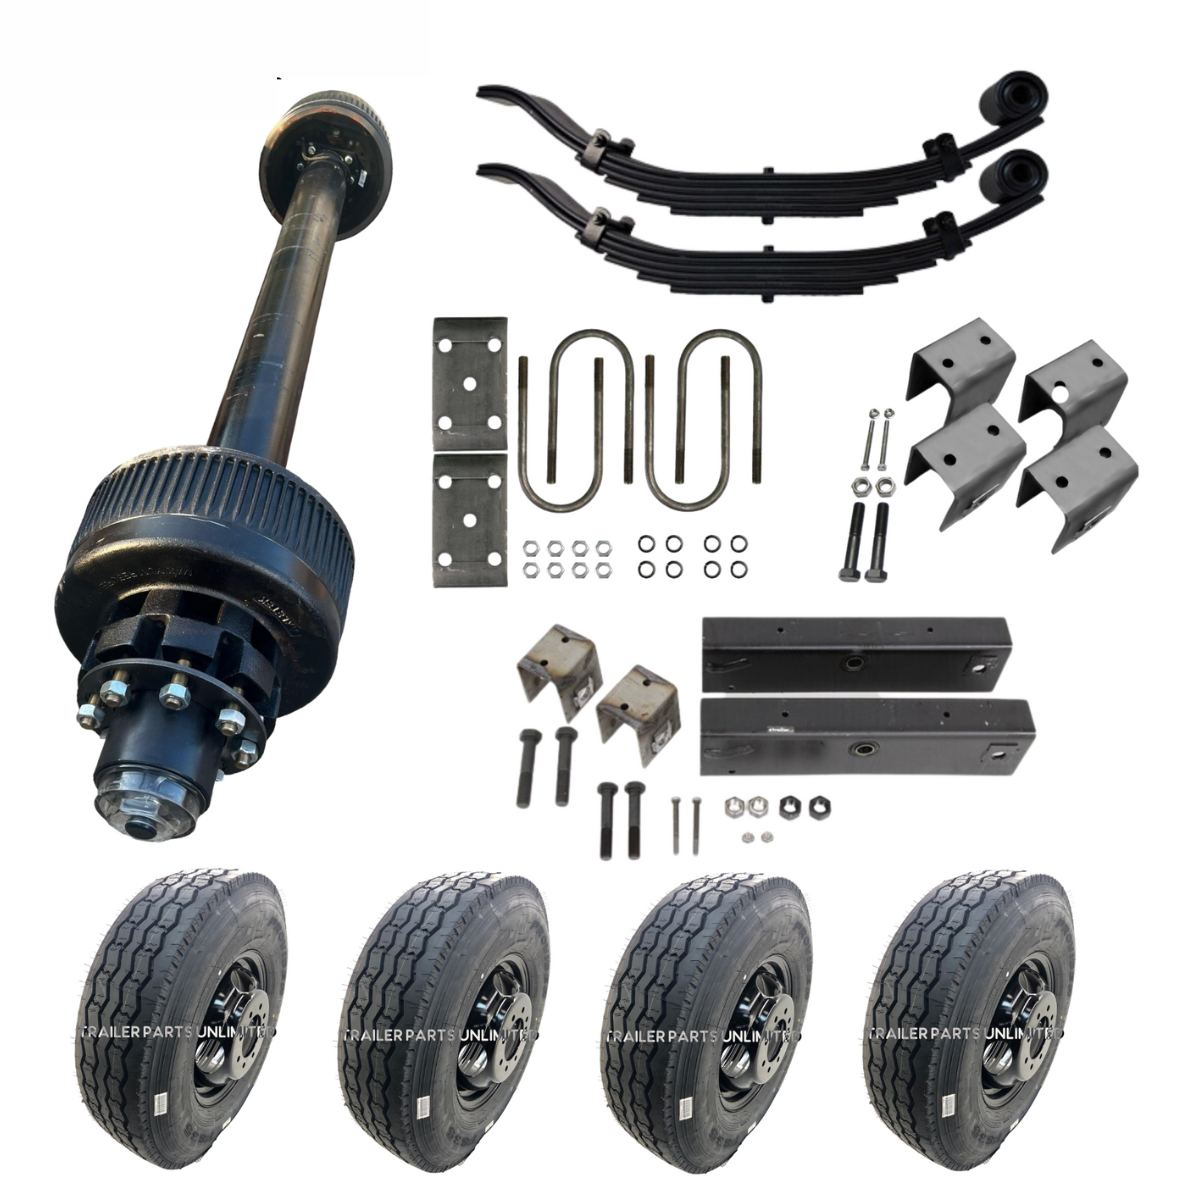 12,000 lb Carter Single Trailer Axle Tire Wheel Kit - 16" Black Duals